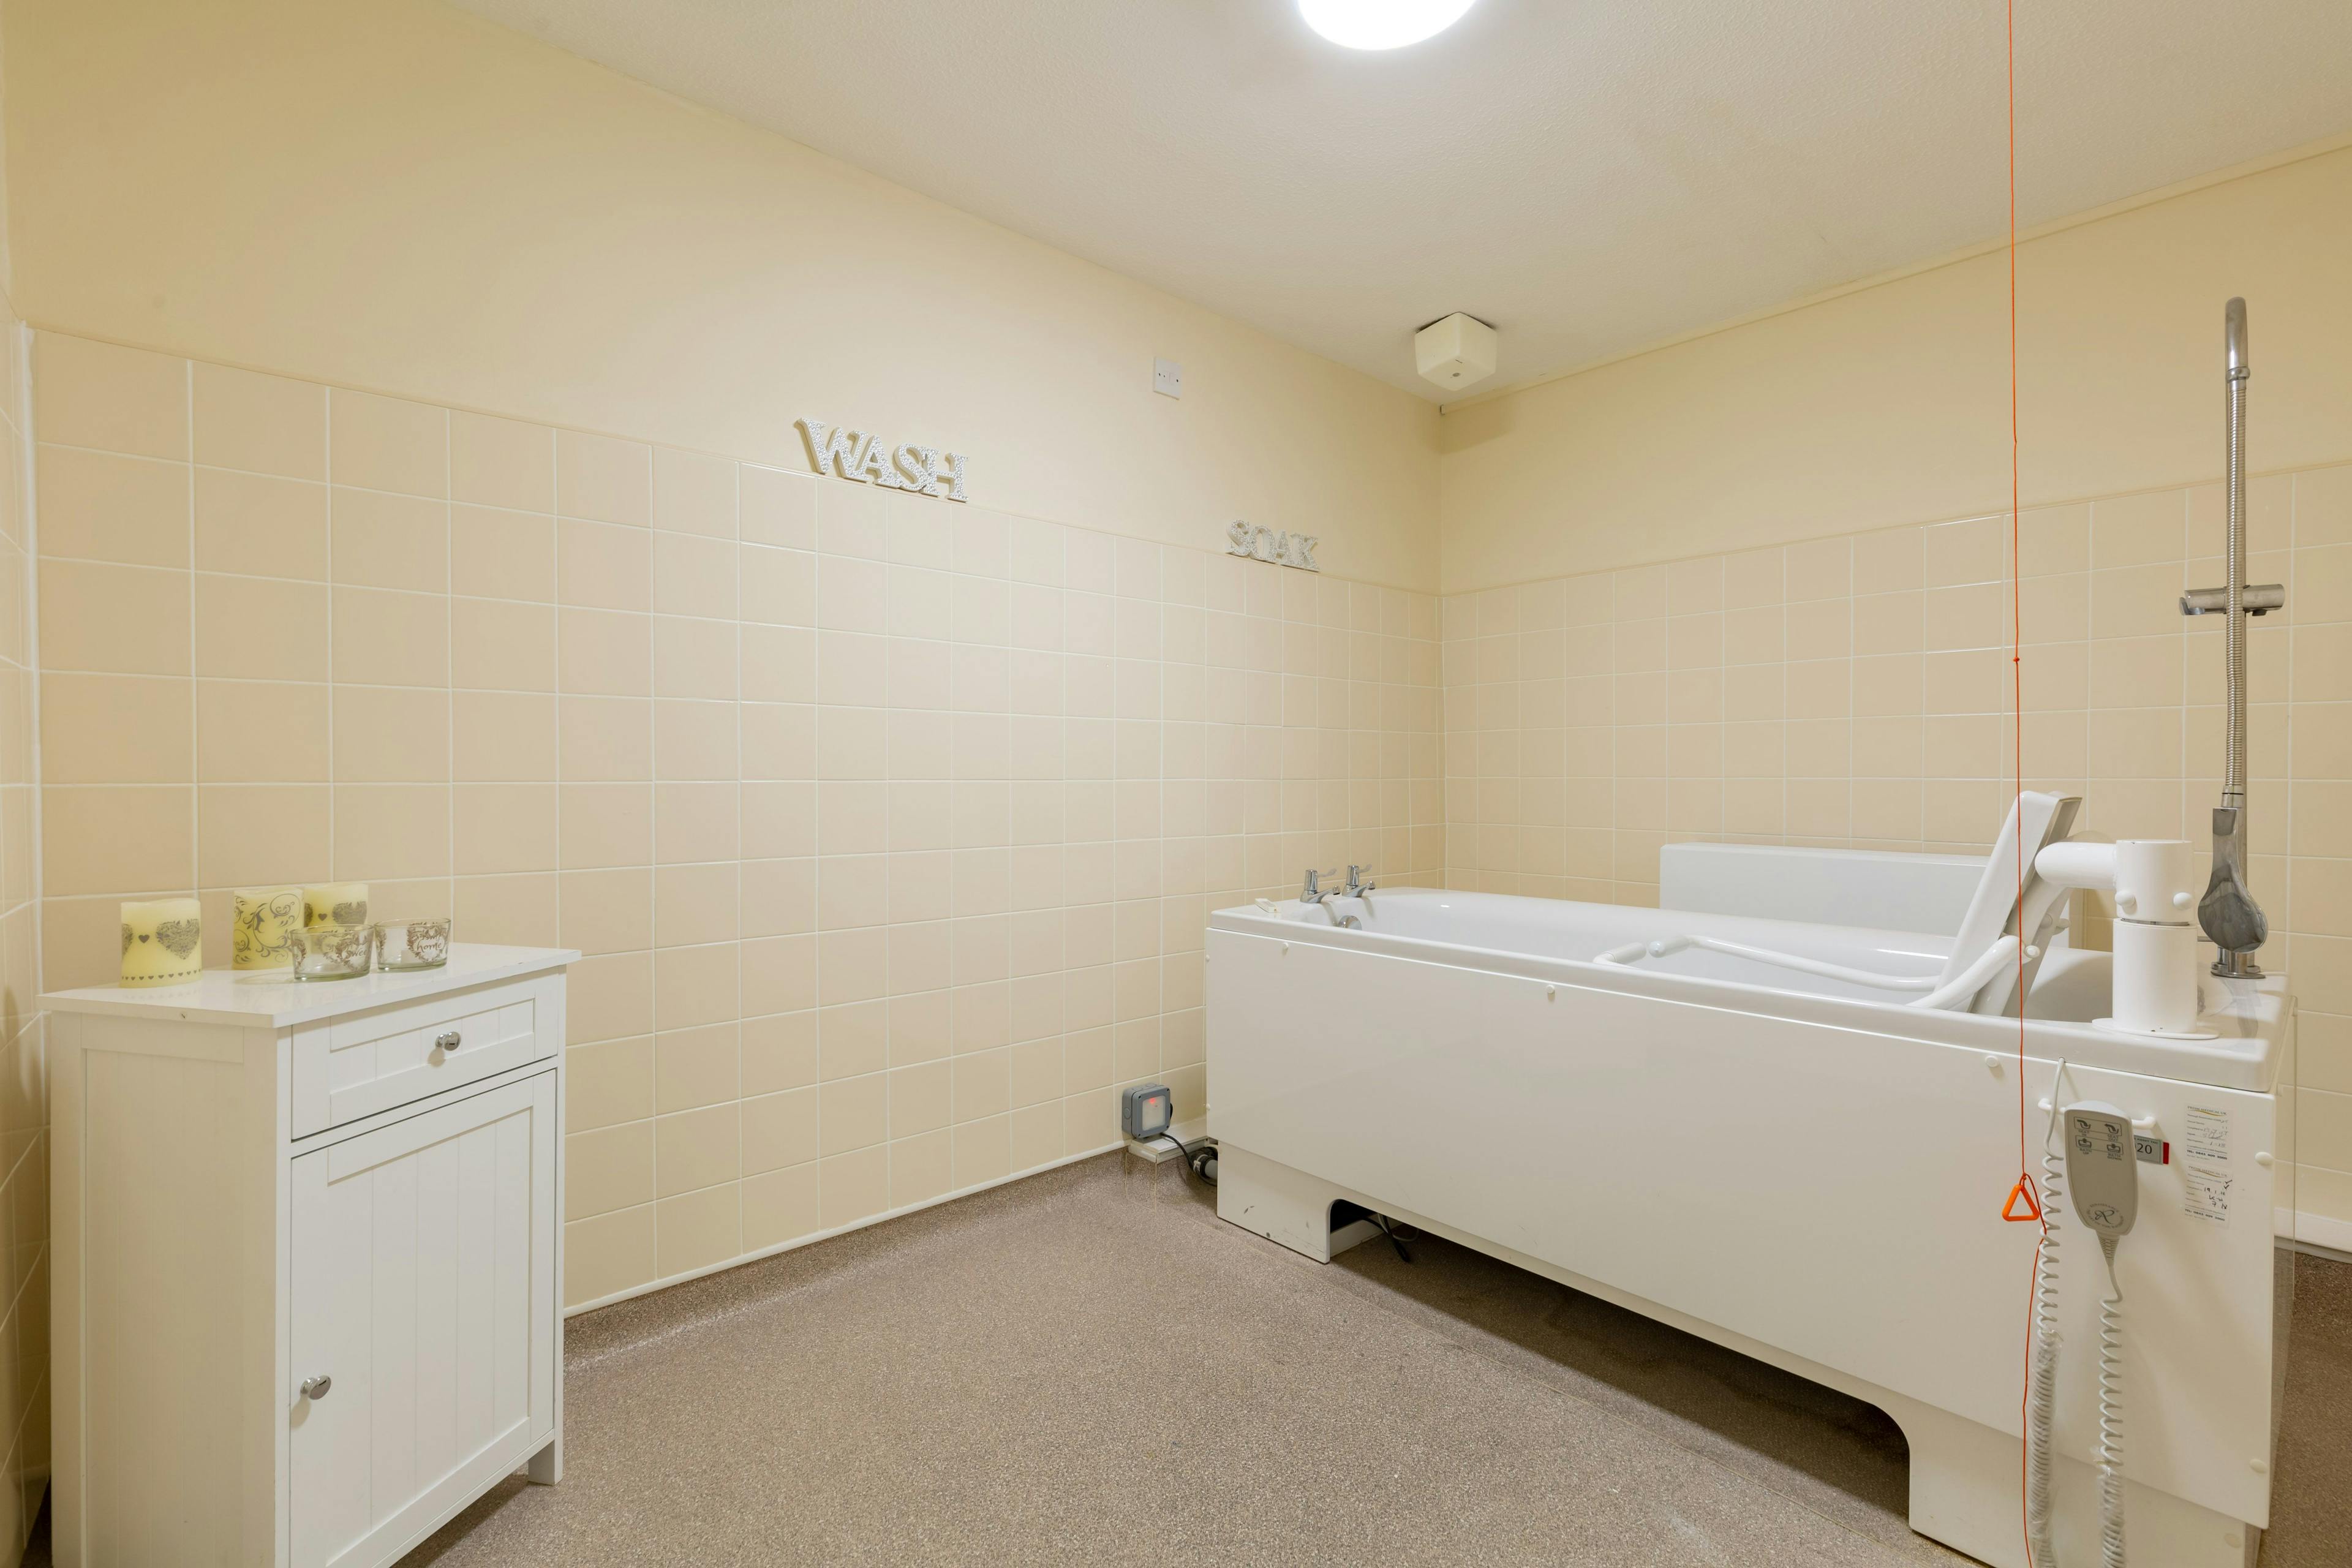 Spa Bathroom at South Chowdene Care Home in Gateshead, Tyne and Wear